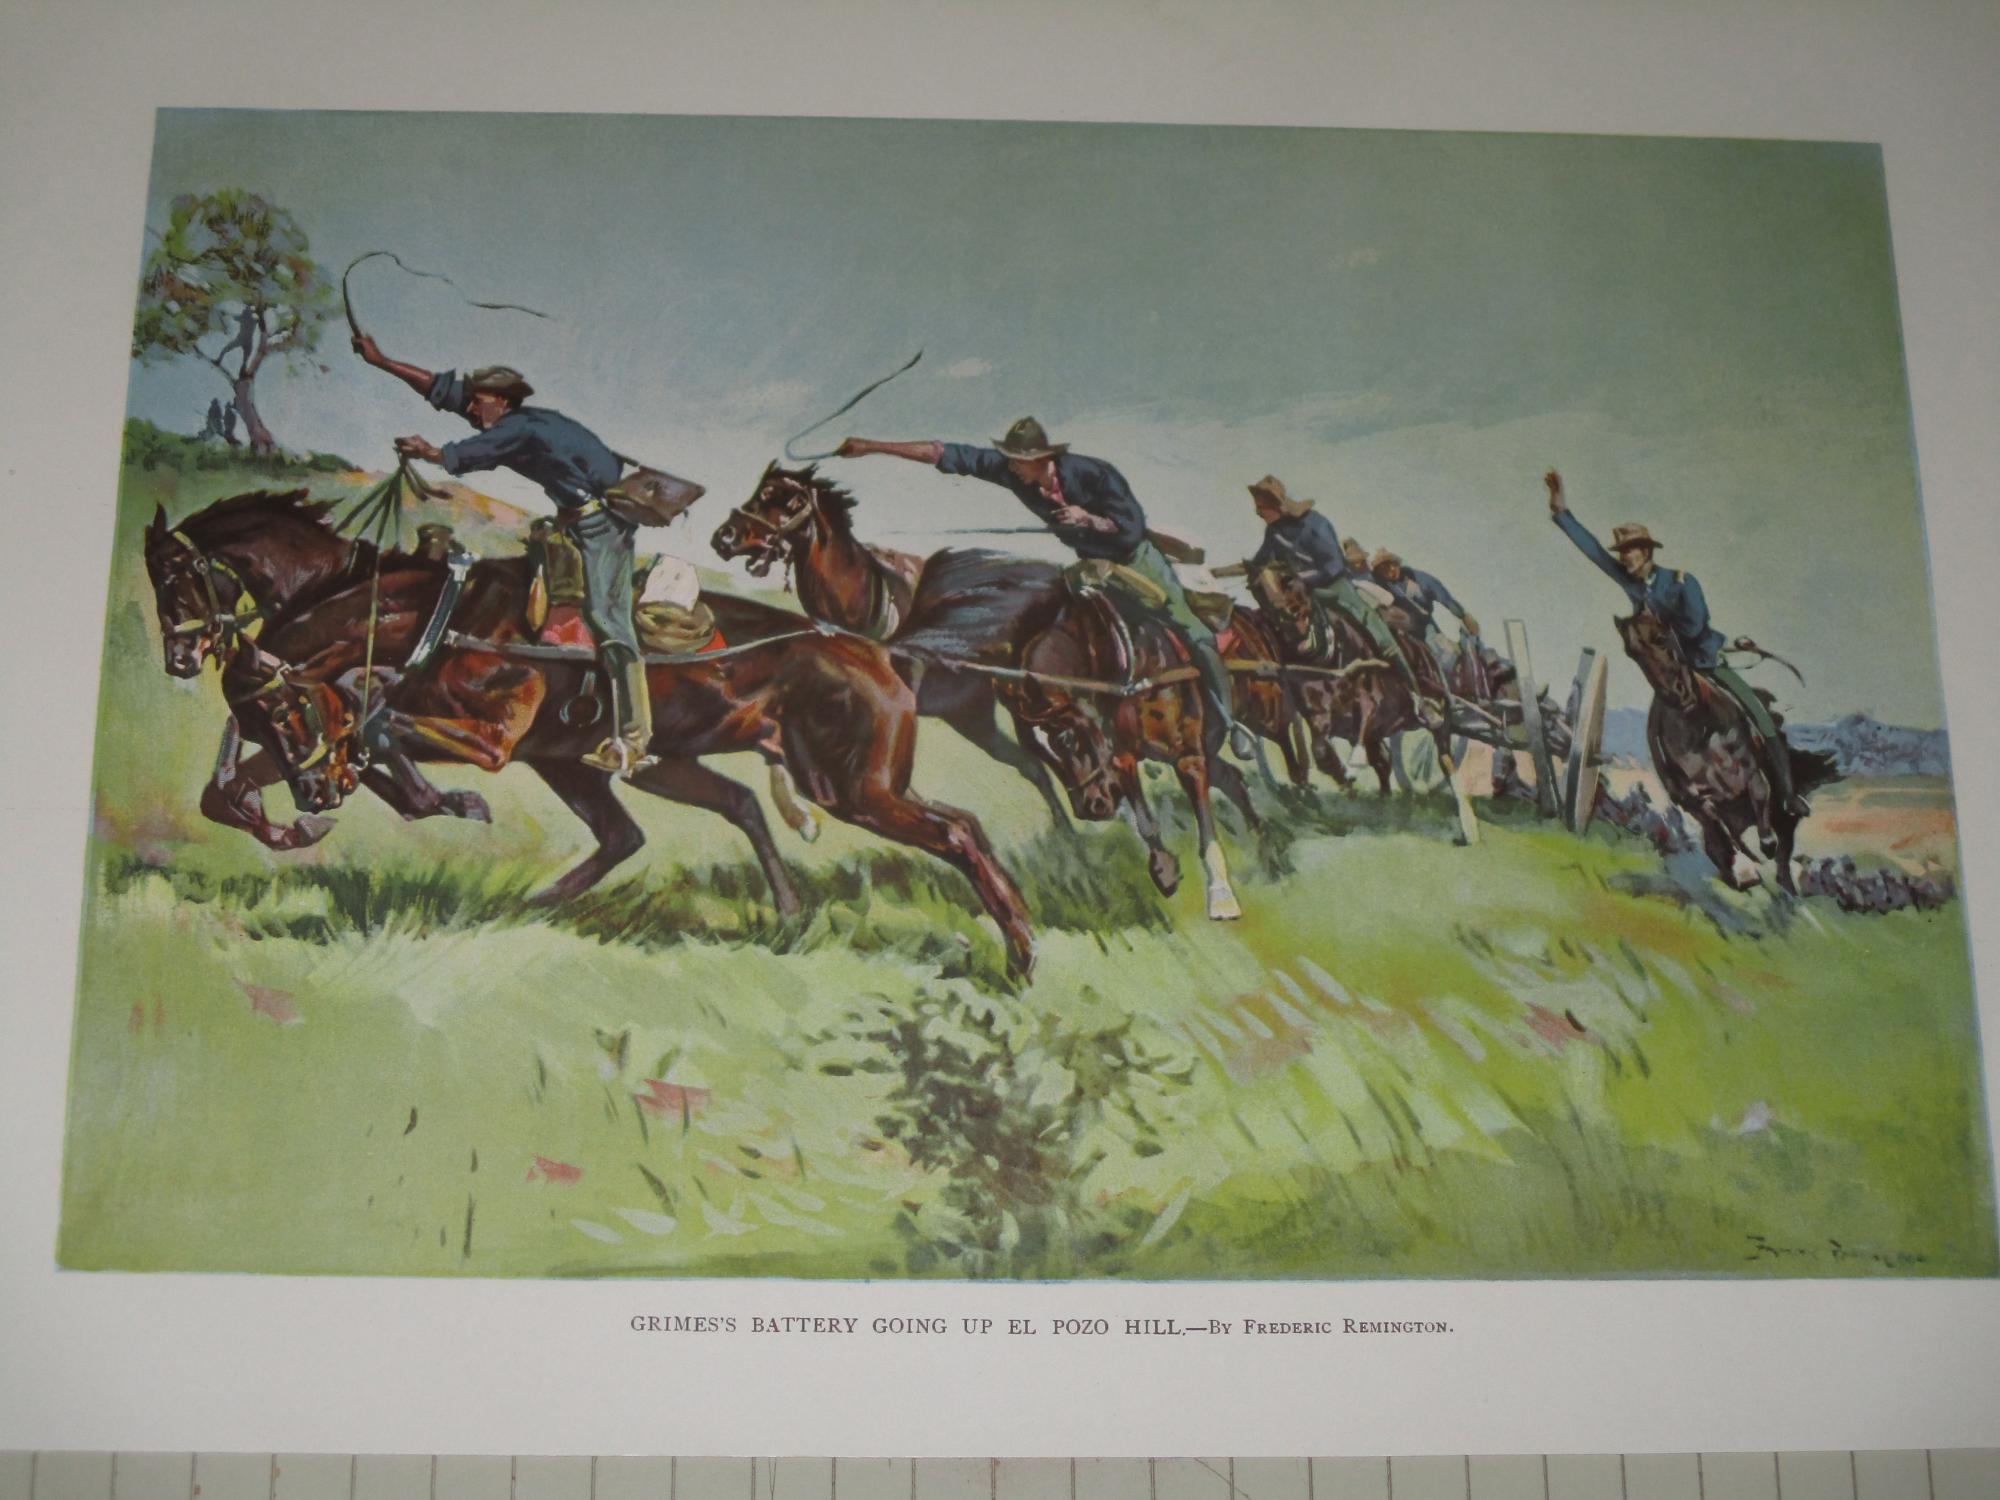 1899 Frederic Remington Print "Grimes's Going Up Pozo Hill" Spanish-Amercian War by Frederic Remington: (1899) Art&nbsp;/&nbsp;Print&nbsp;/&nbsp;Poster | rareviewbooks